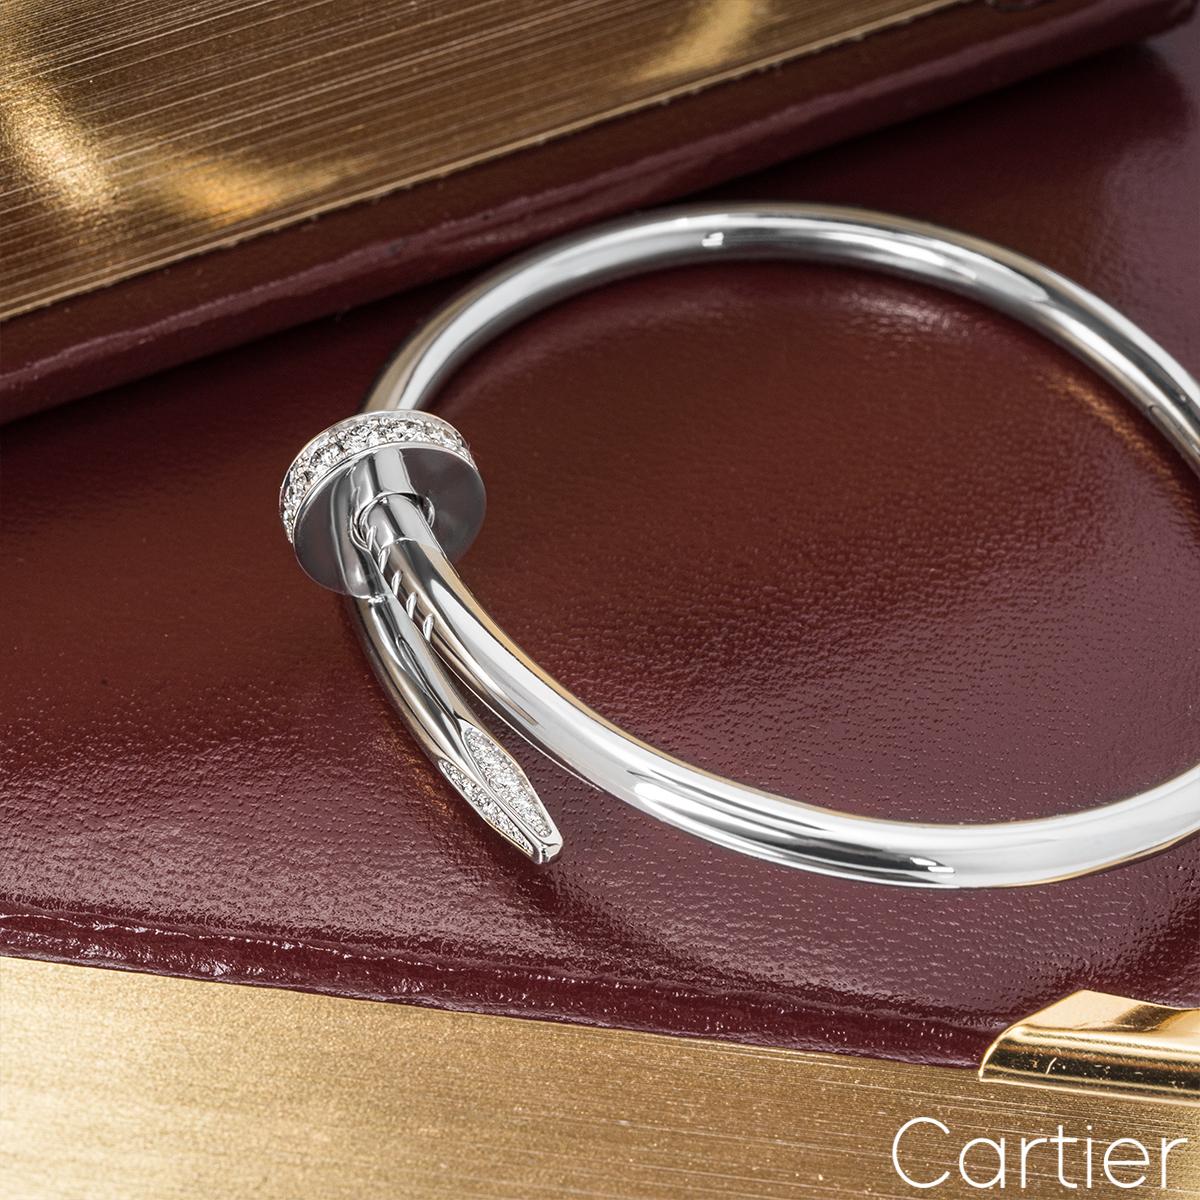 Cartier White Gold Diamond Juste Un Clou Bracelet Size 15 B6048715 In Excellent Condition For Sale In London, GB